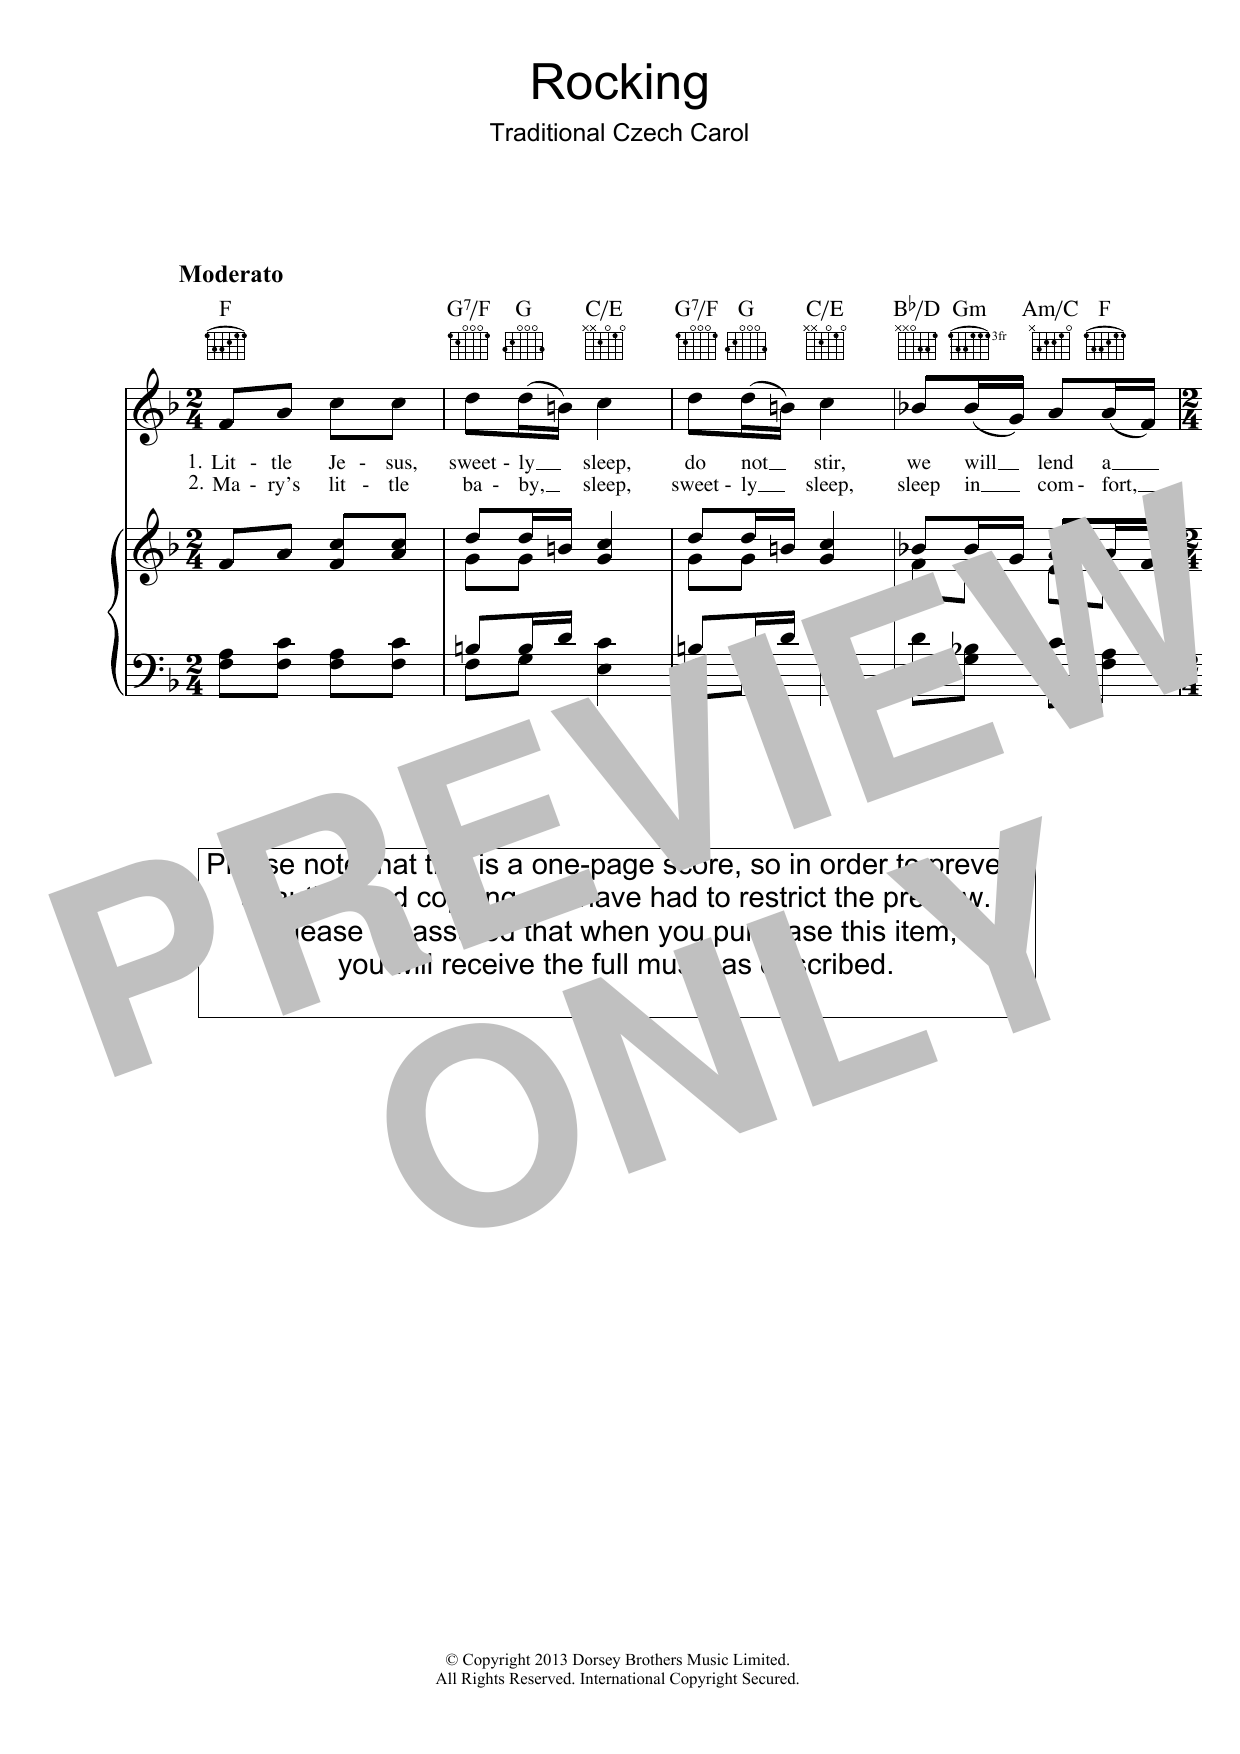 Download Christmas Carol Little Jesus (Rocking Carol) Sheet Music and learn how to play Lyrics & Chords PDF digital score in minutes